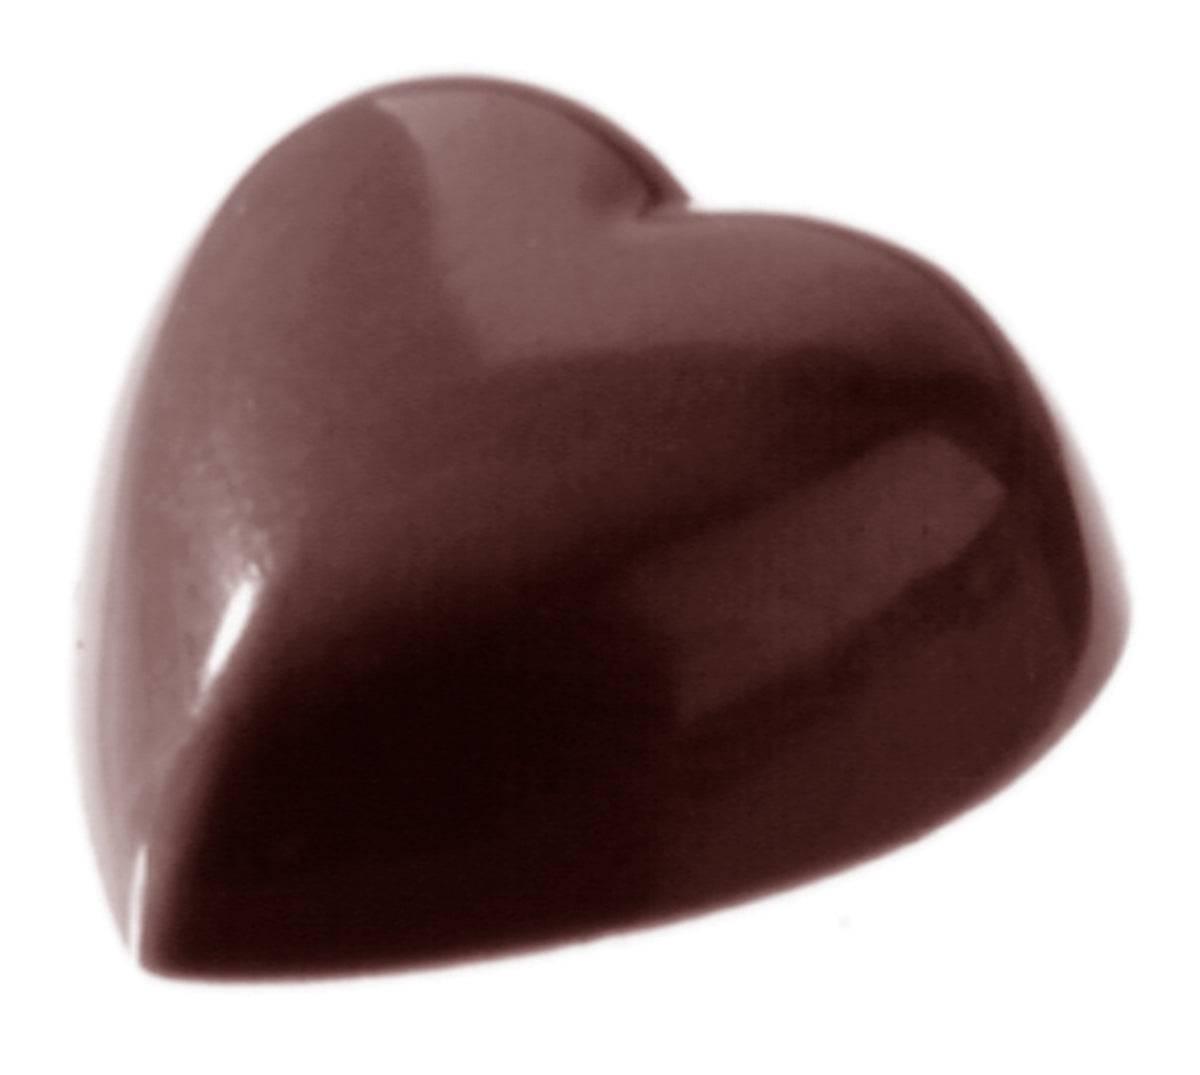 CW2143 - CHOCOLATE MOULD HEART 6X10 PCS - Zucchero Canada